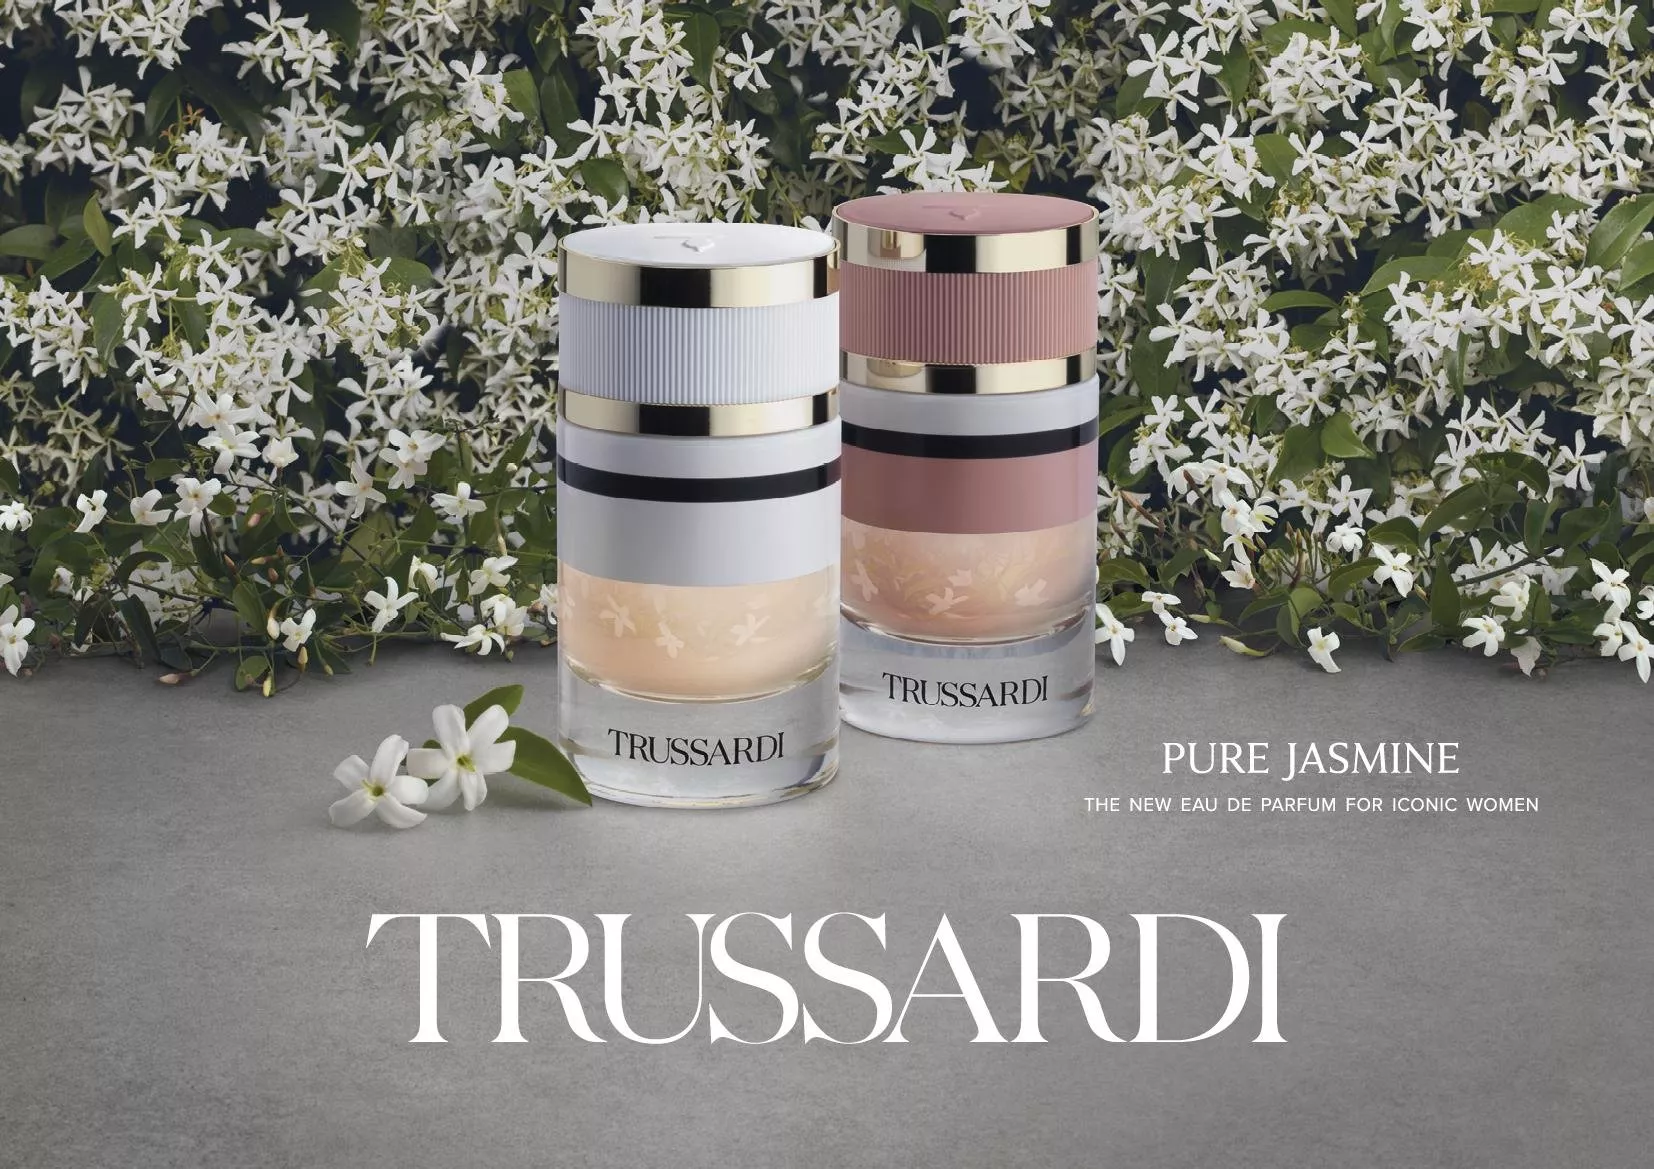 علامة تروساردي تطلق عطر Trussardi Pure Jasmine